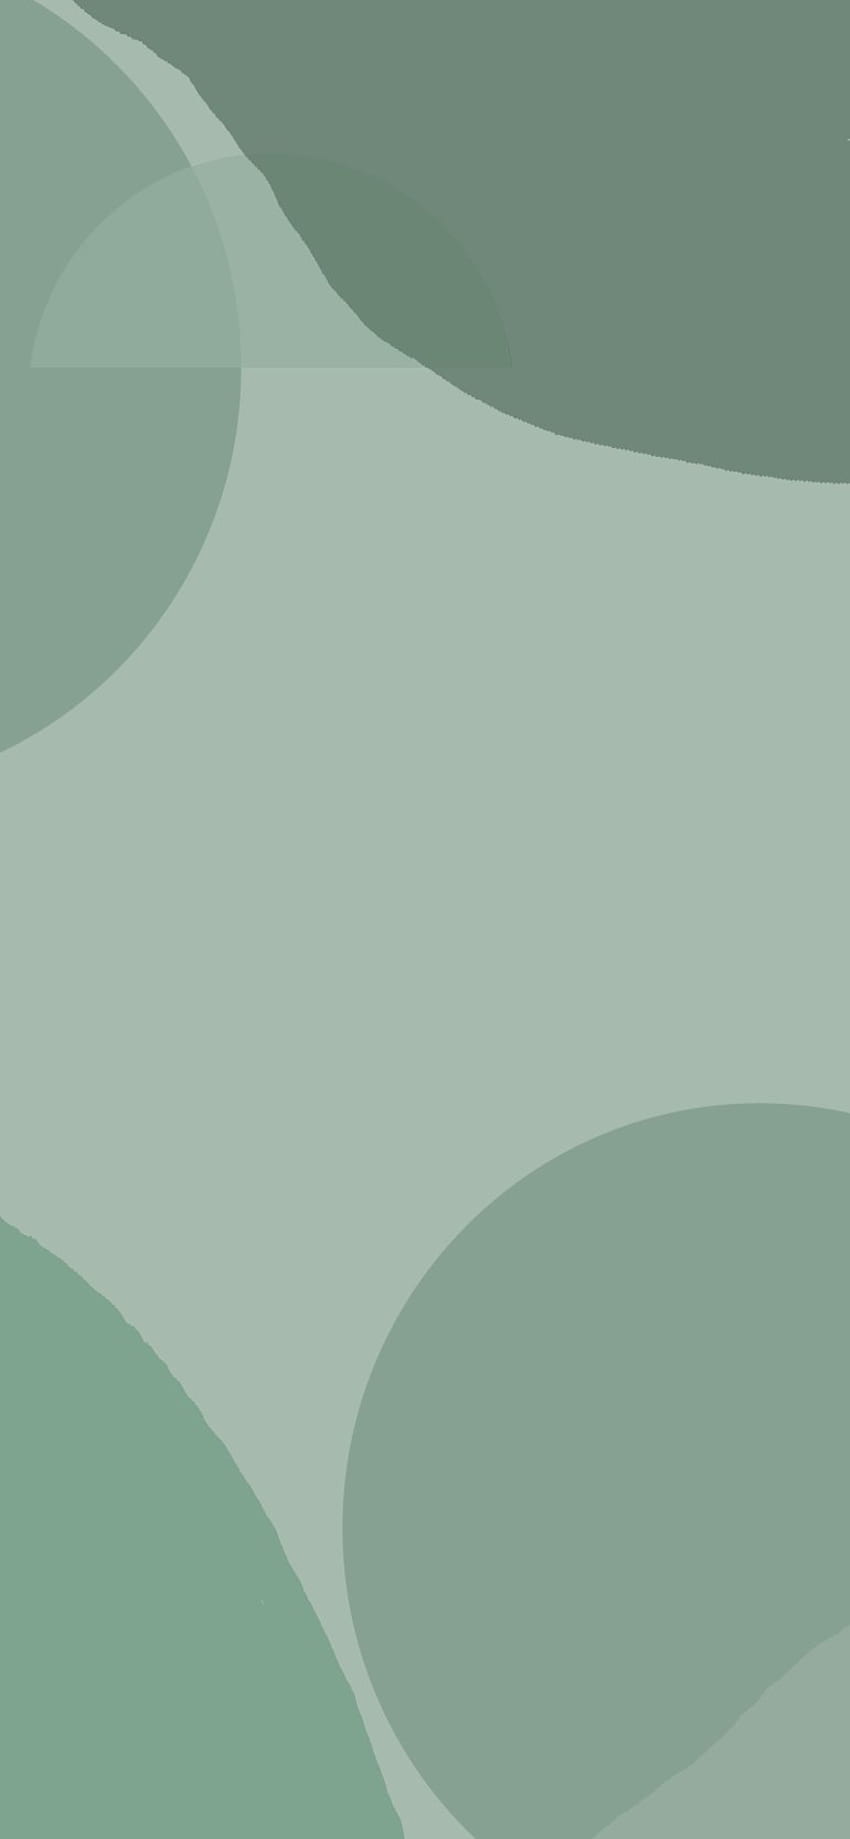 Estética verde salvia: verde salvia abstracto boho - Idea, iPhone, esquemas de color, estética minimalista verde fondo de pantalla del teléfono